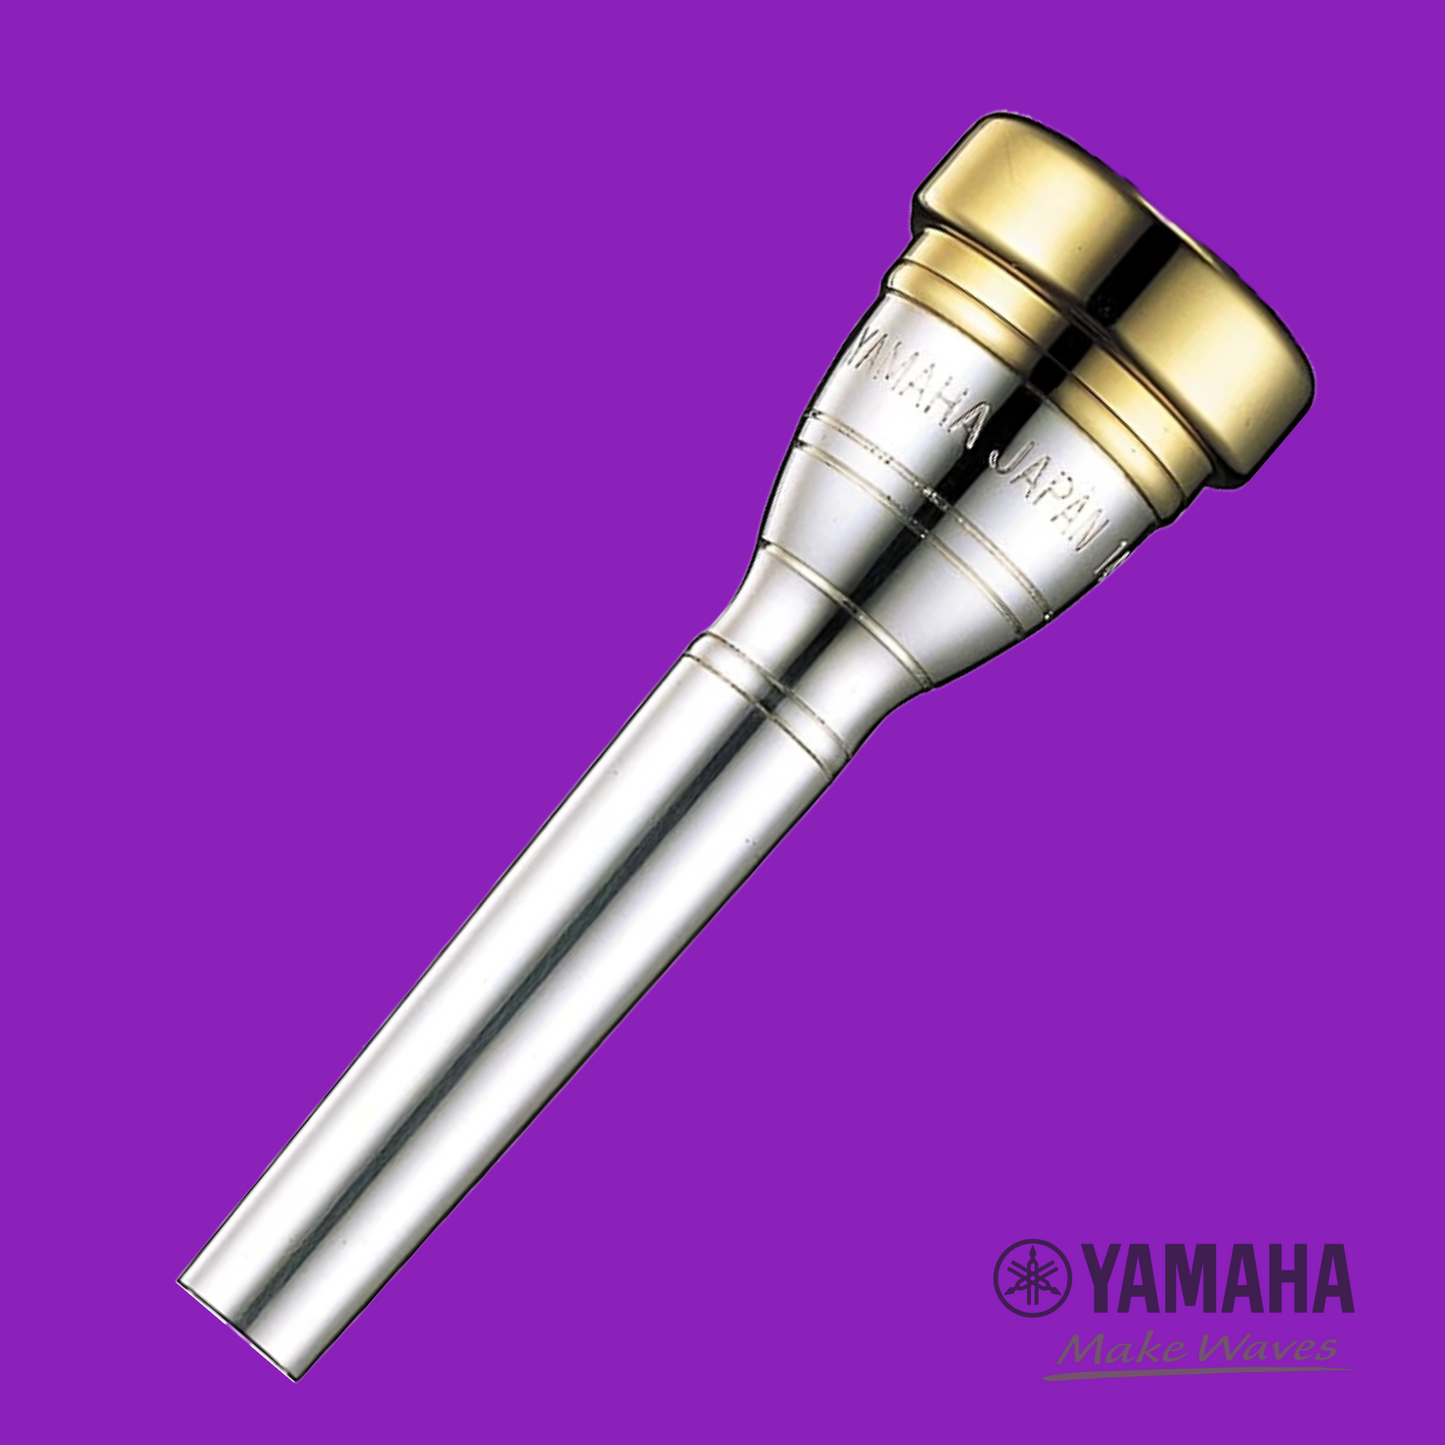 Yamaha Gold Plated Trumpet Mouthpiece - 16C4